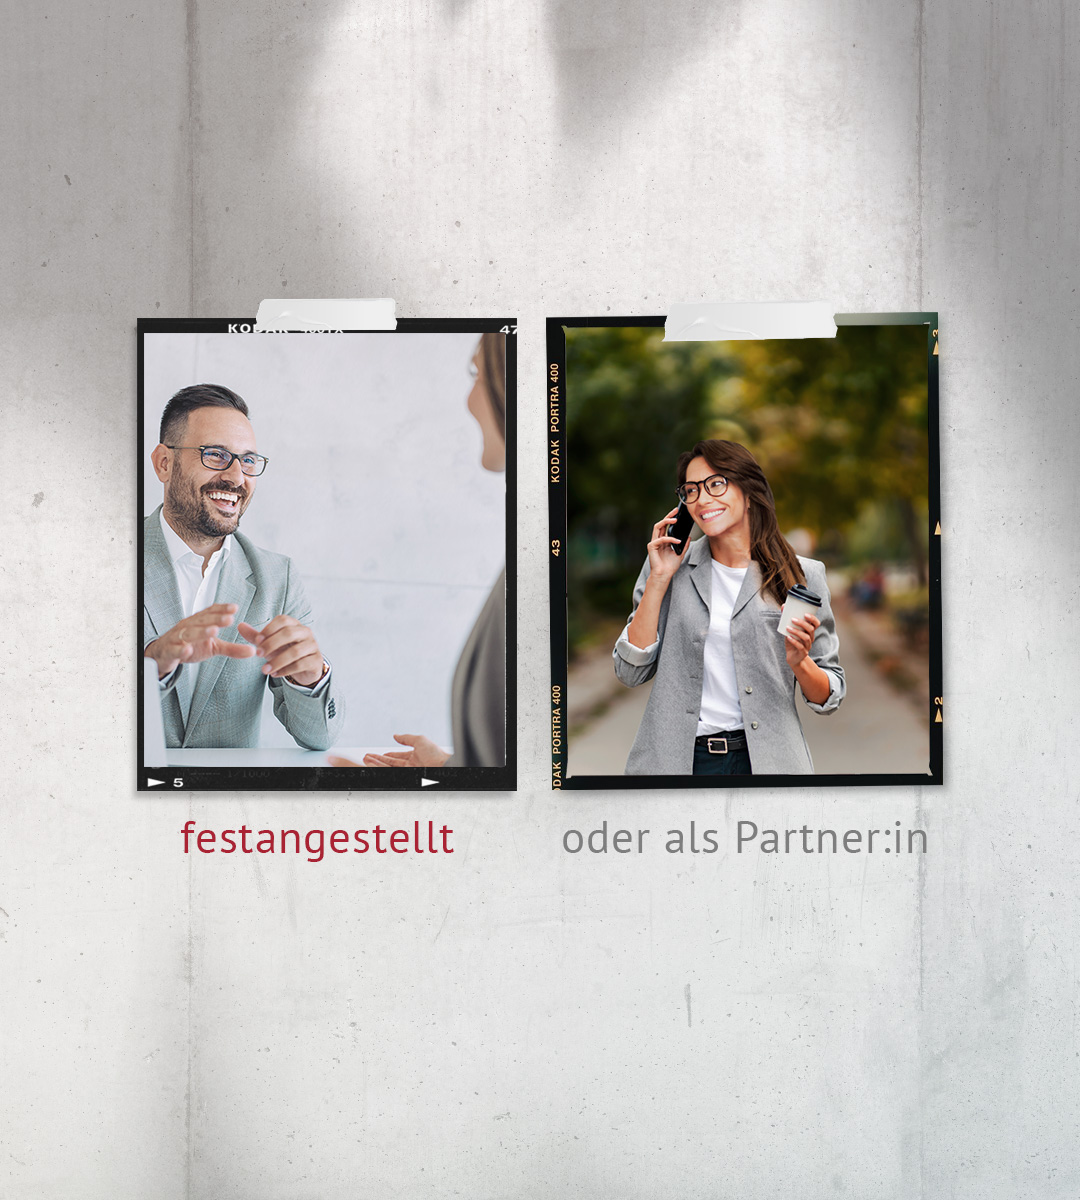 Qualifizierter Immobilienverkäufer (m/w/d) | Festangestellt oder als Partner:in | Job in Nürnberg | BAUWERKE – Liebe & Partner